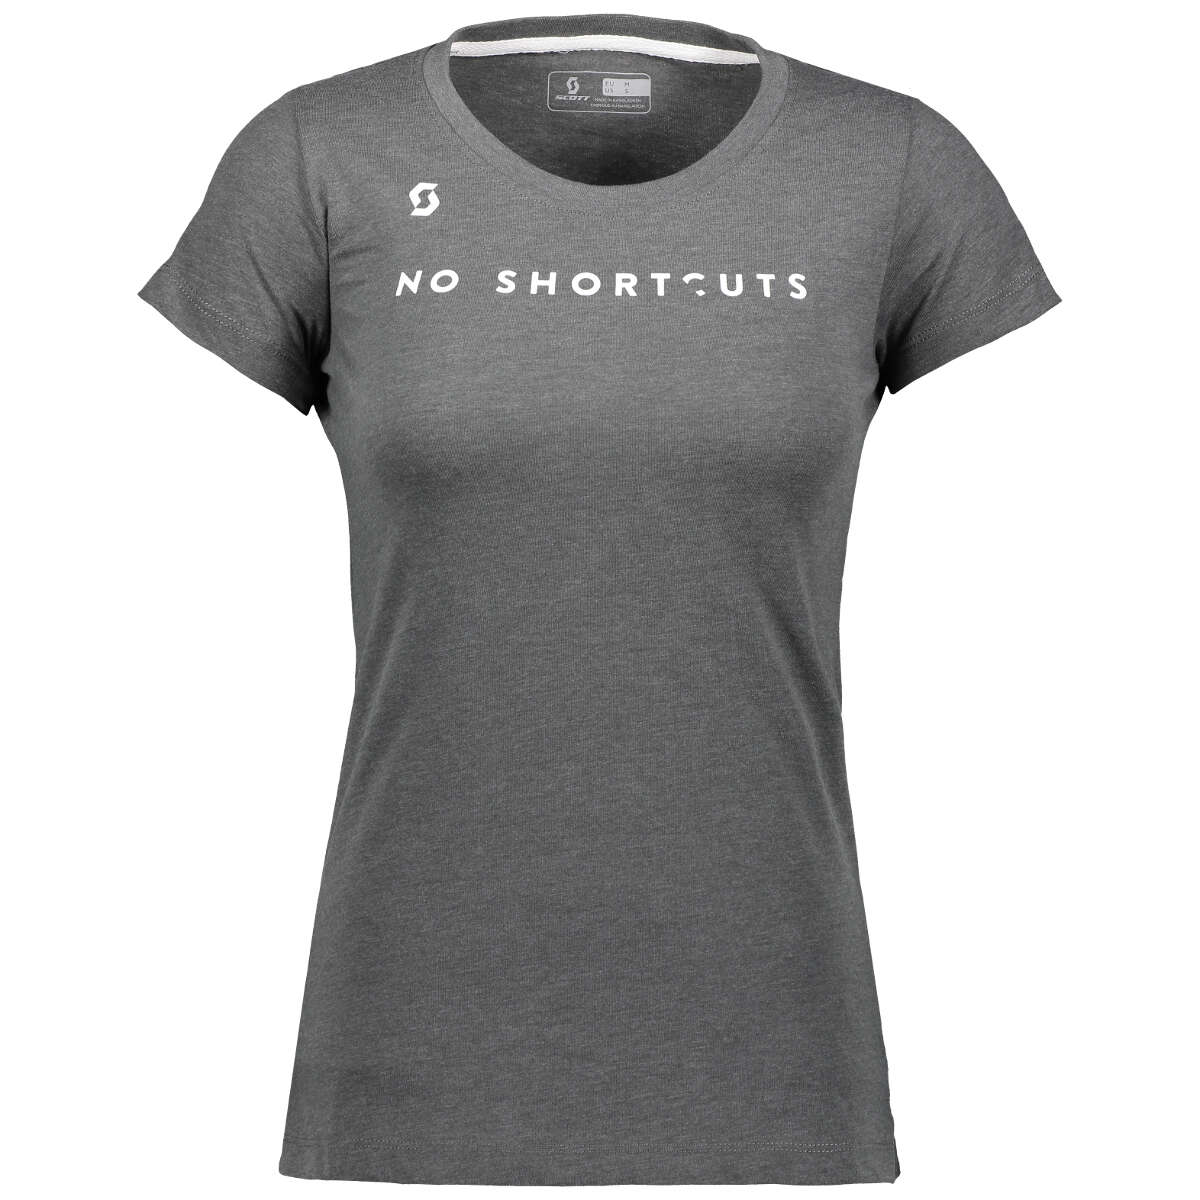 Scott Girls T-Shirt 10 No Shortcuts Dark Heather Grey